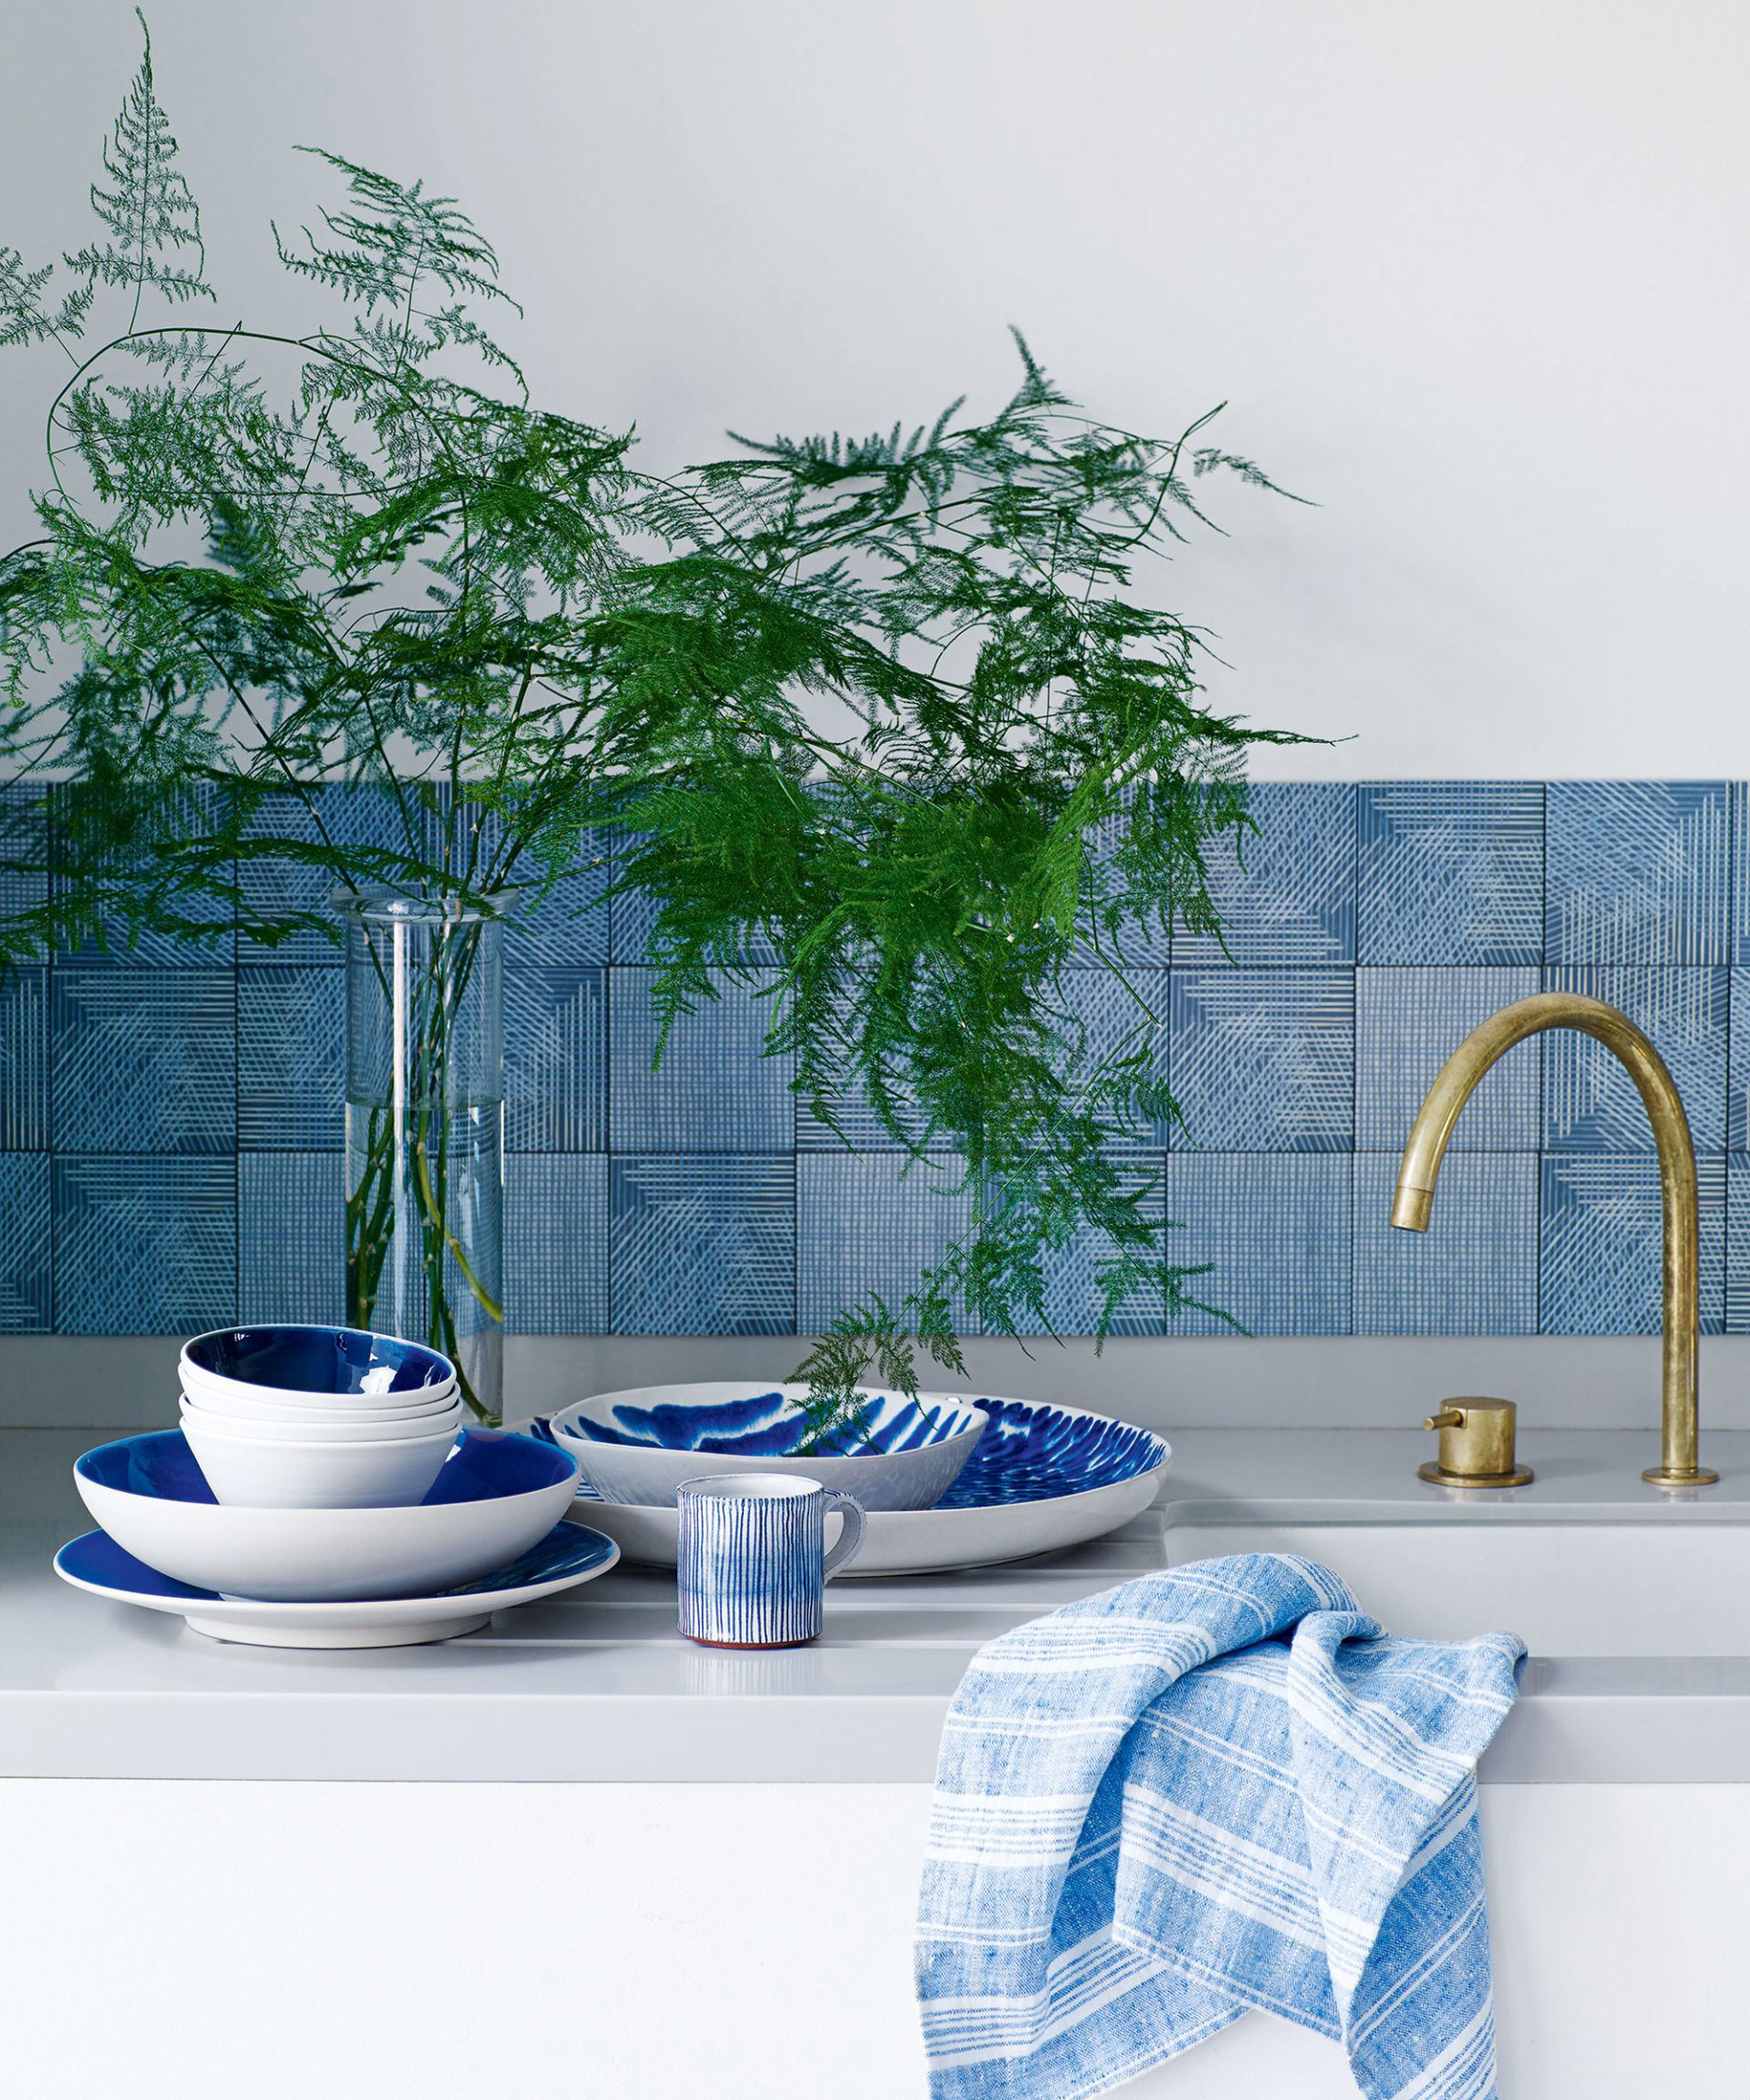 Kitchen countertop ideas – 14 worktops in marble, granite and composite ...